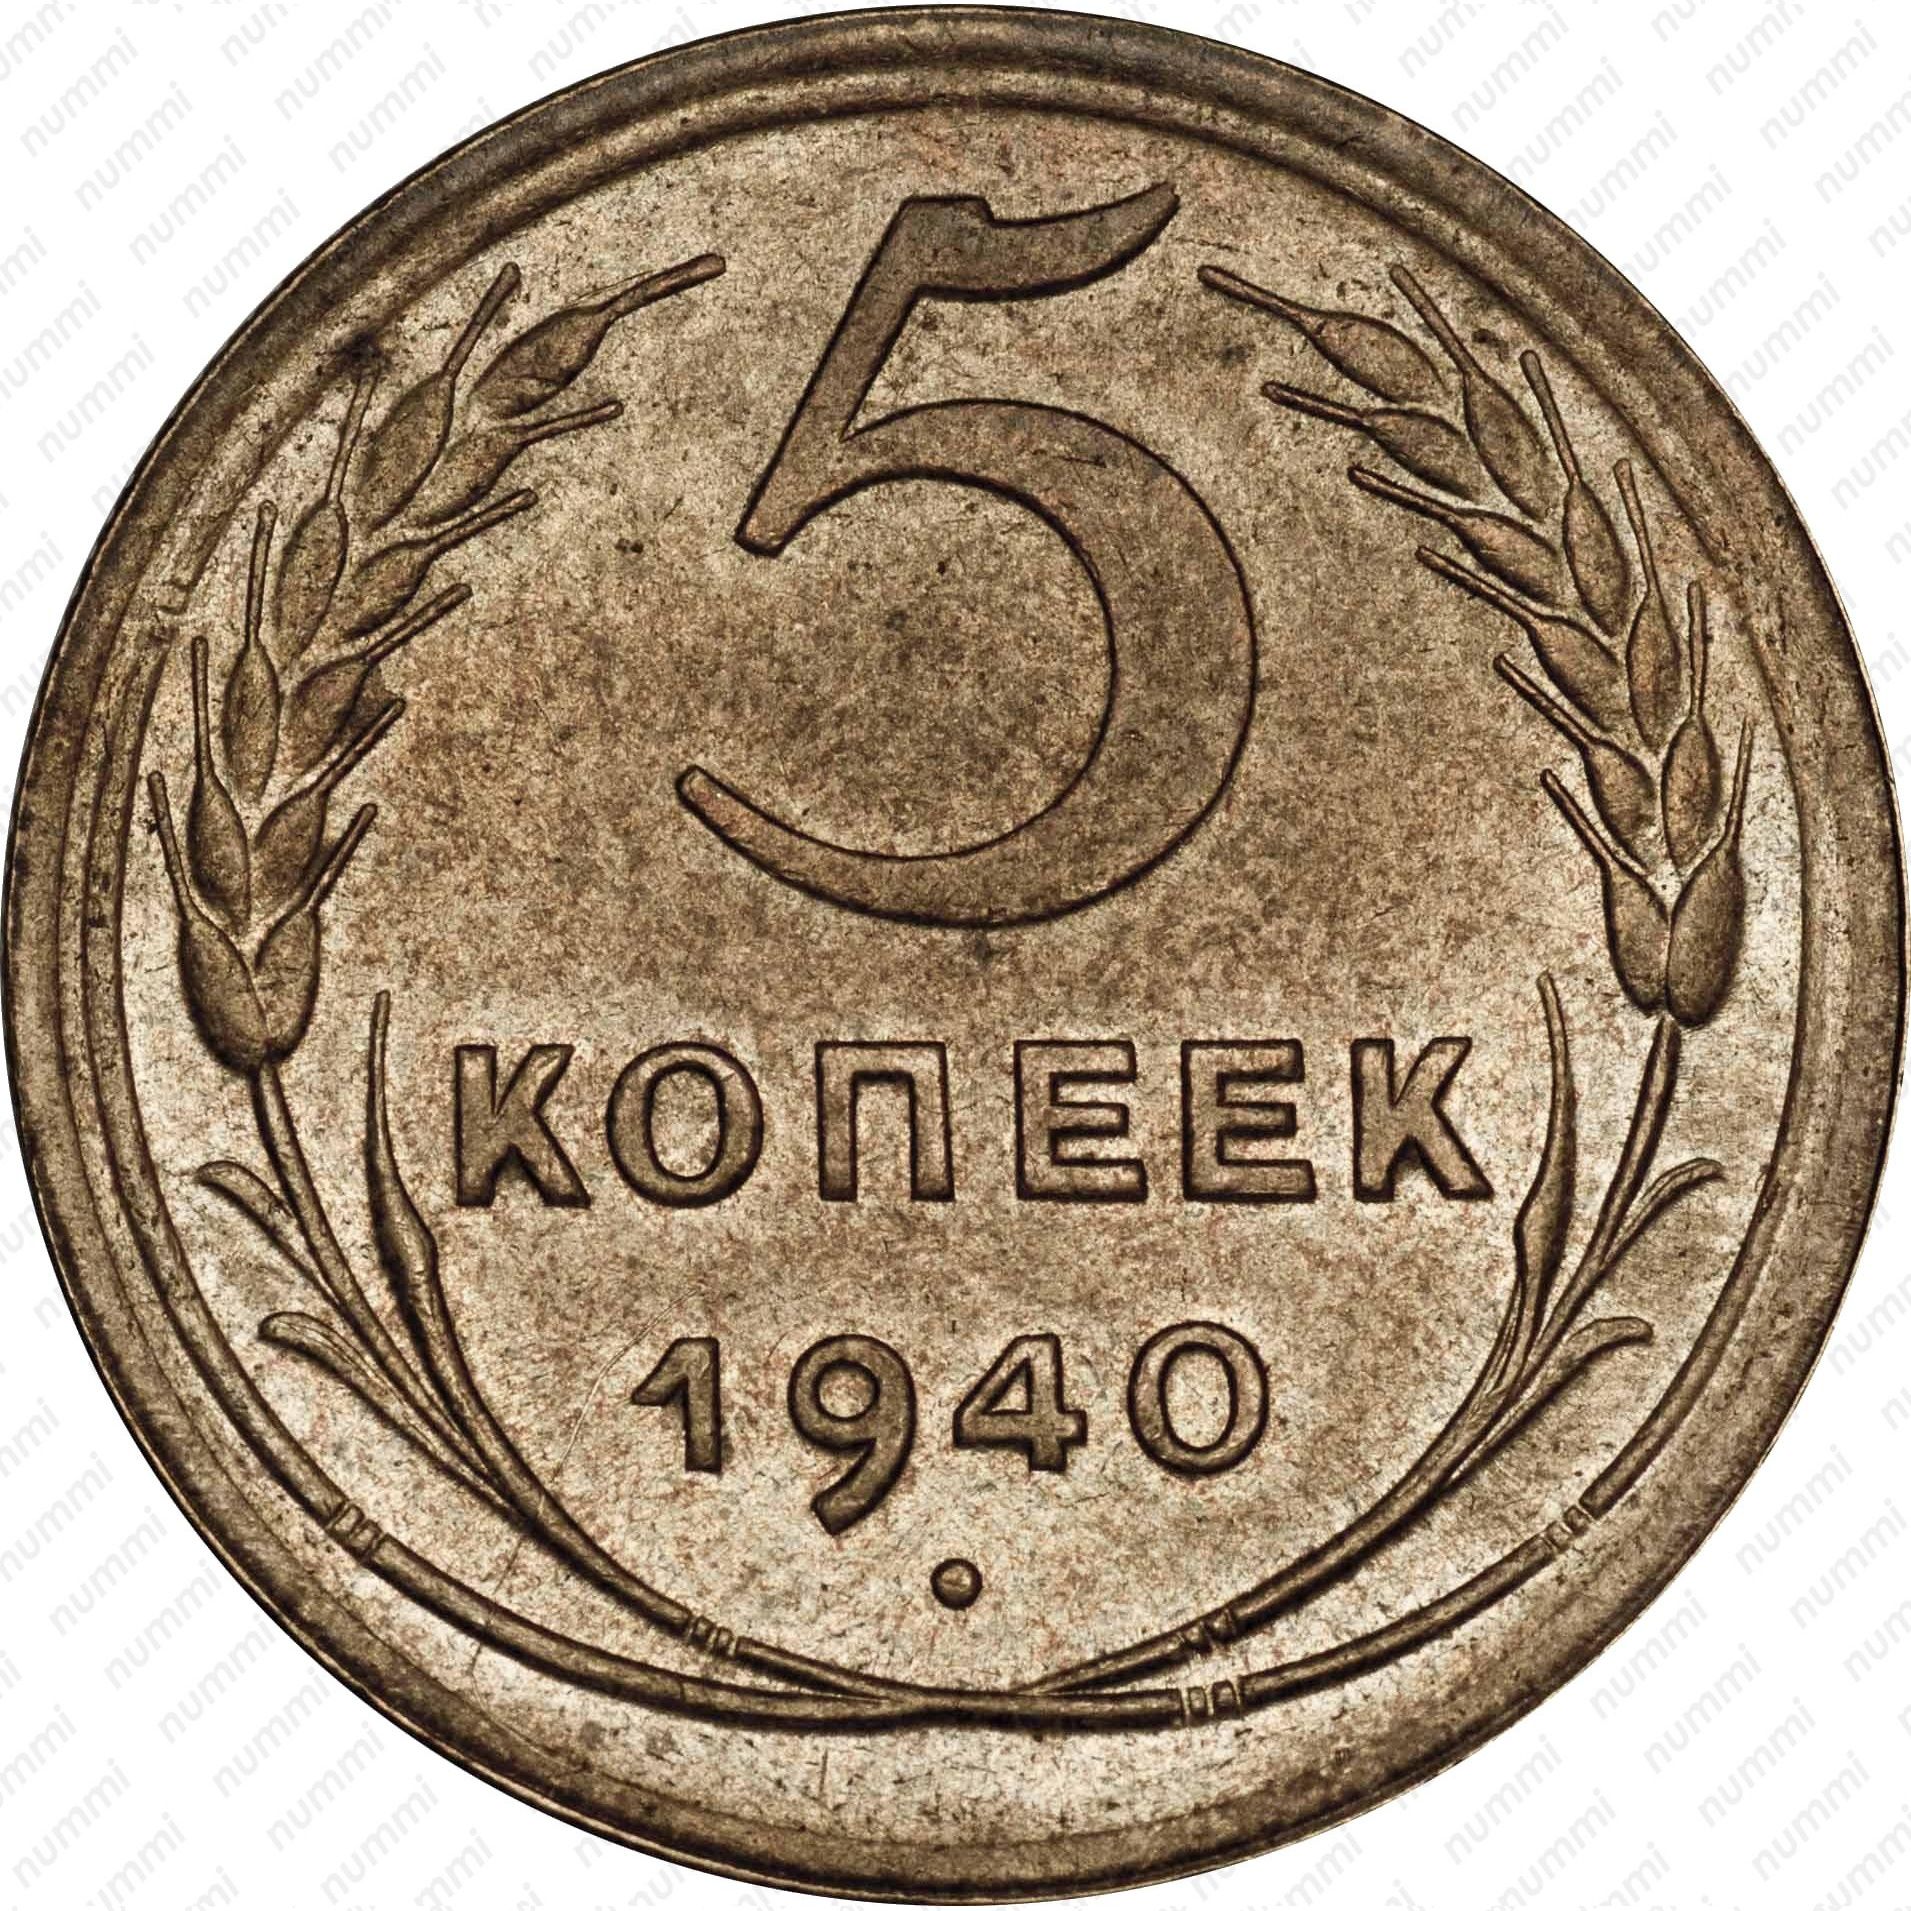 5 копеек 1940 цена. 5 Копеек 1940 года. Монеты 5 копеек СССР реверс. Монета 5 копеек 1940. Копейка 1940.